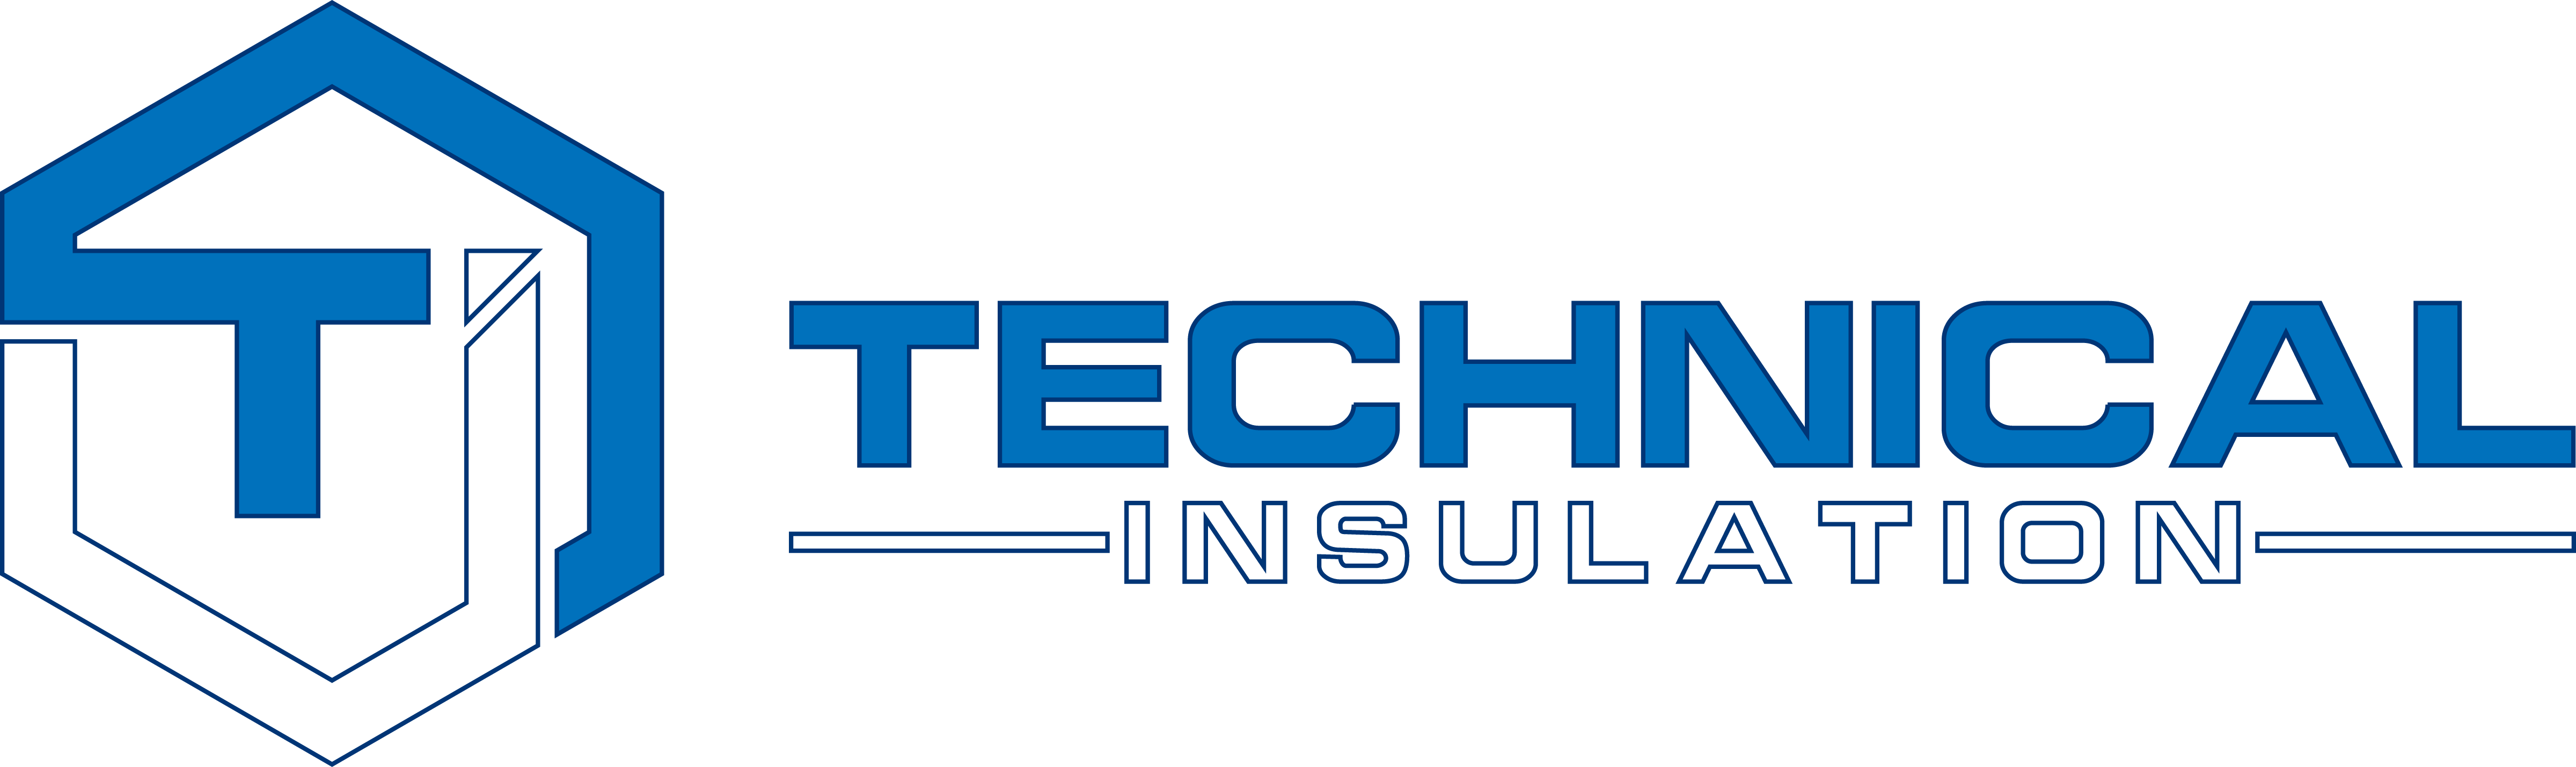 Technical Insulation logo